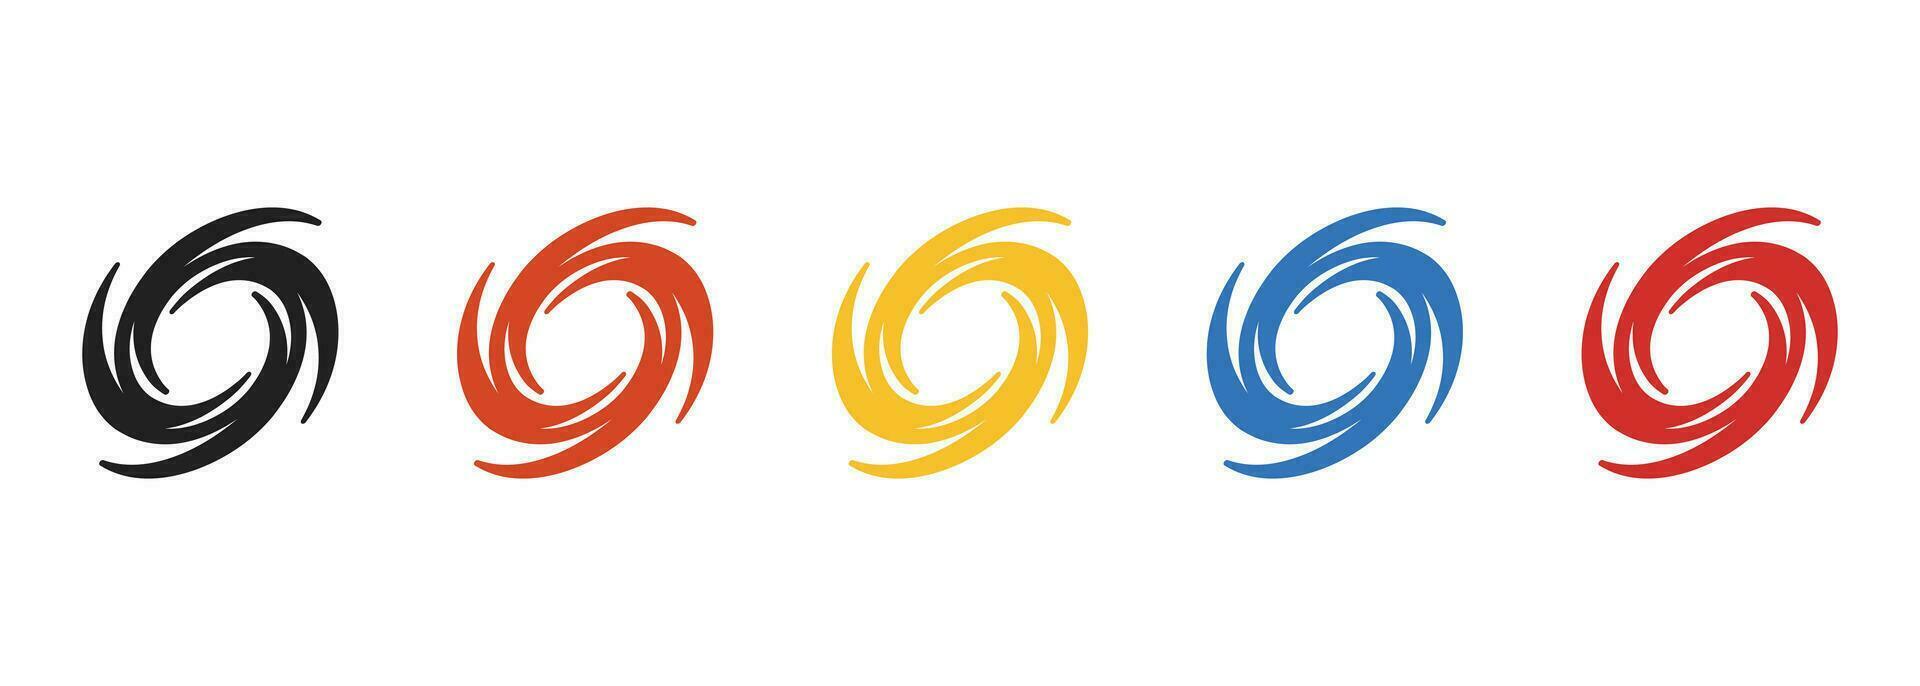 Hurrikan-Symbol. taifun, sturm, twister, wirbelillustrationsdesign im abstrakten stil. vektor